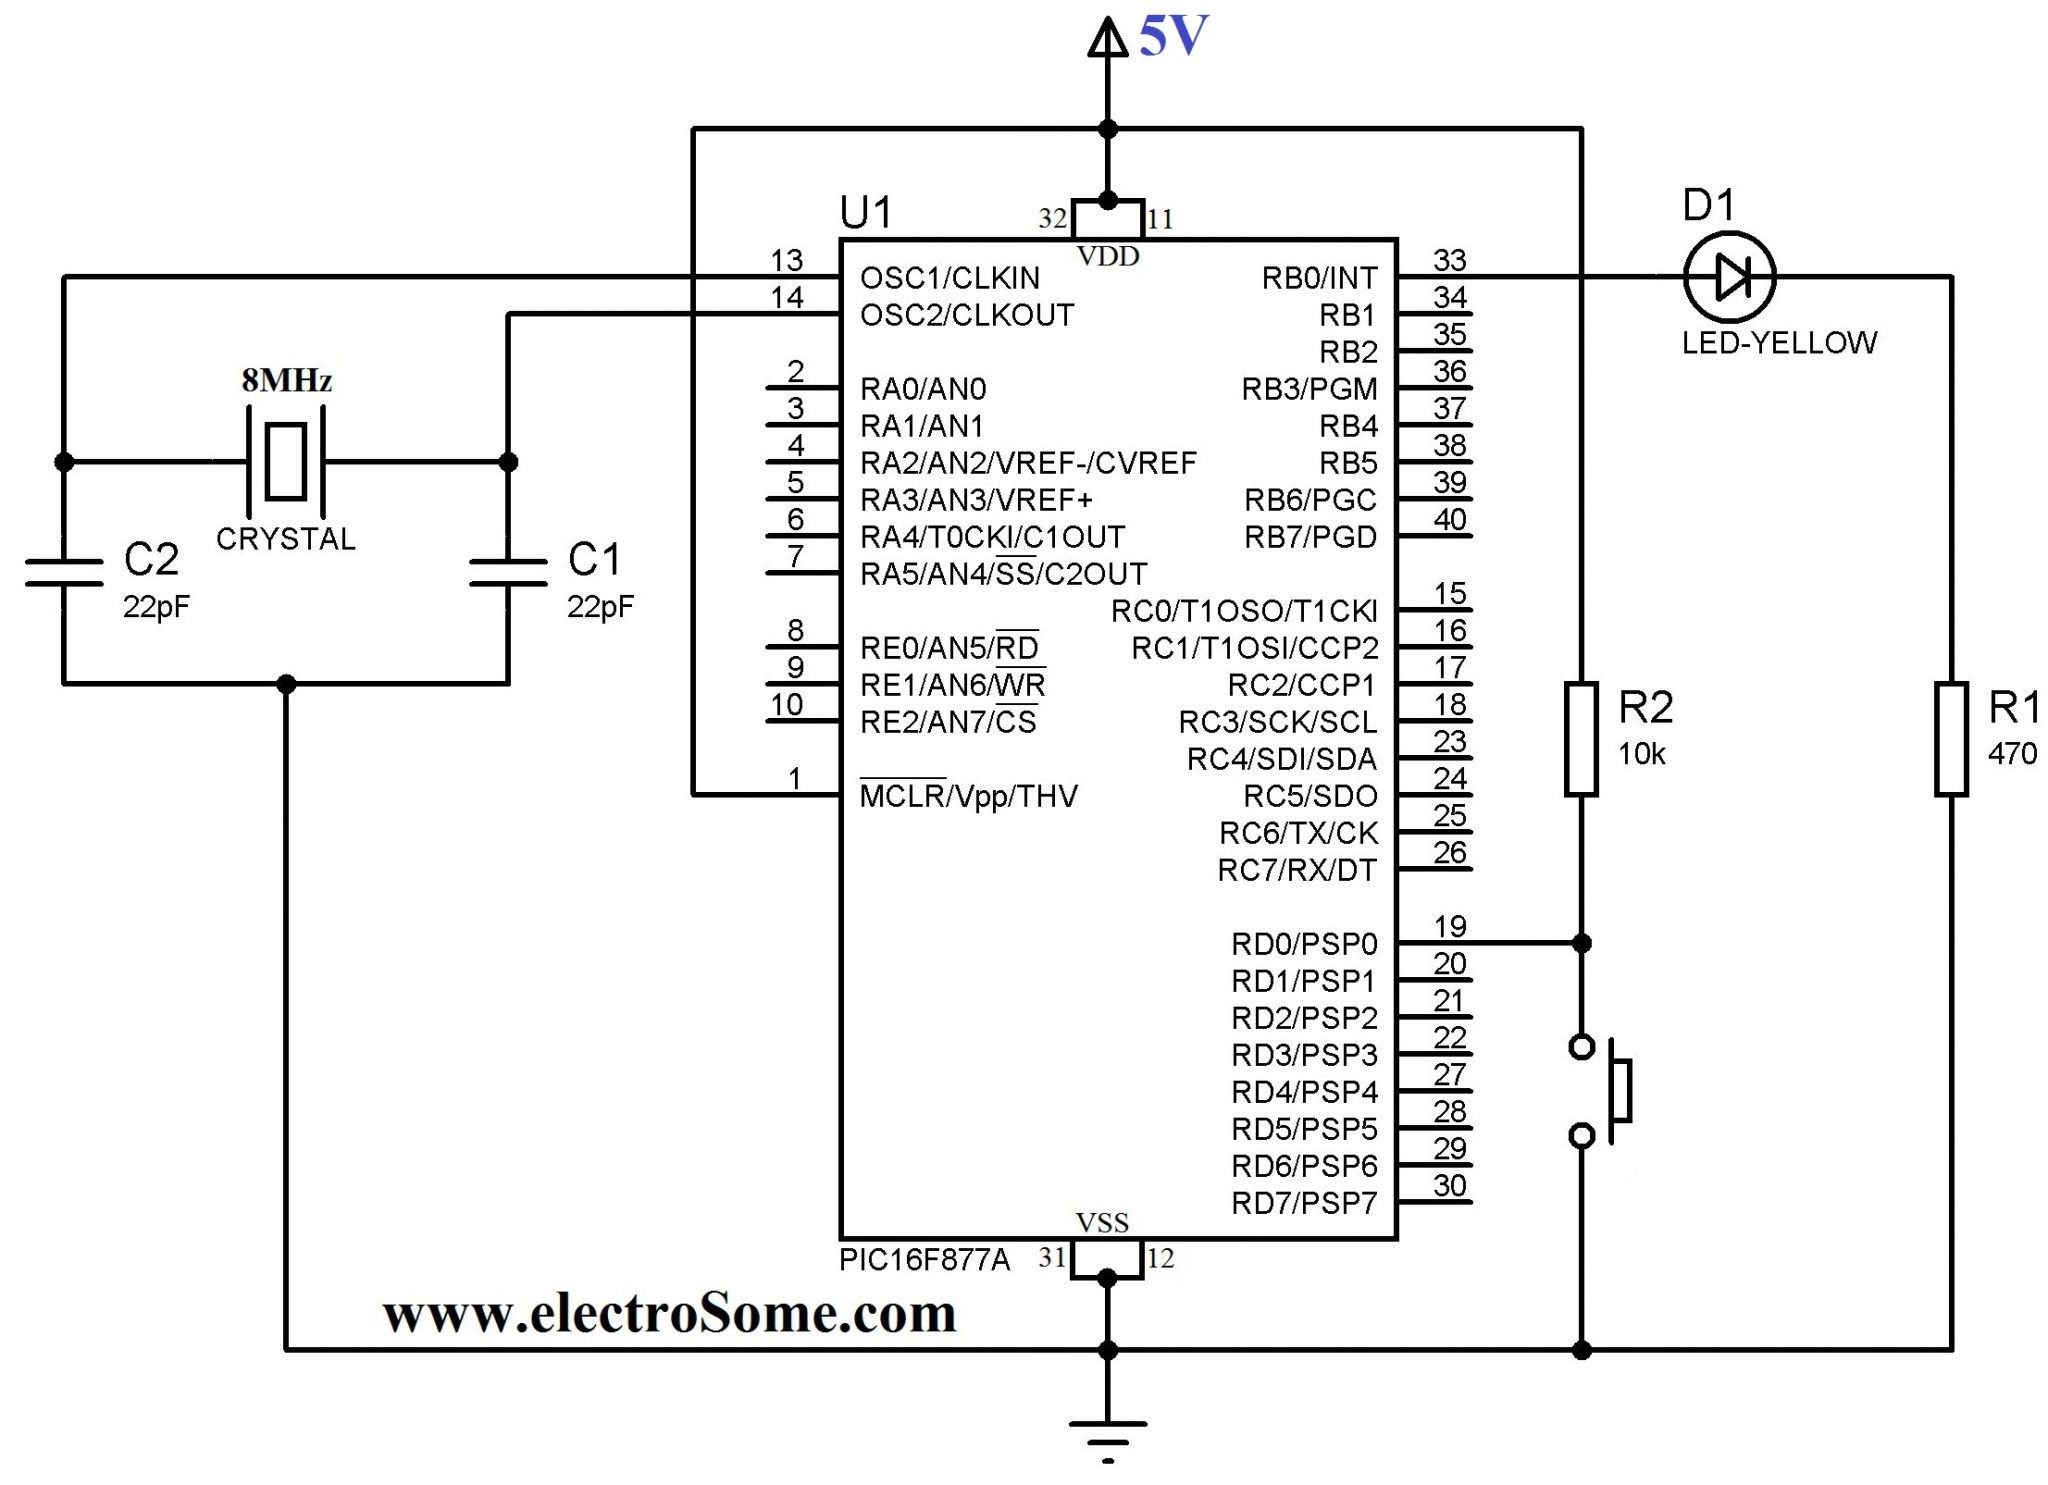 Circuit Diagram Using Push Button Switch